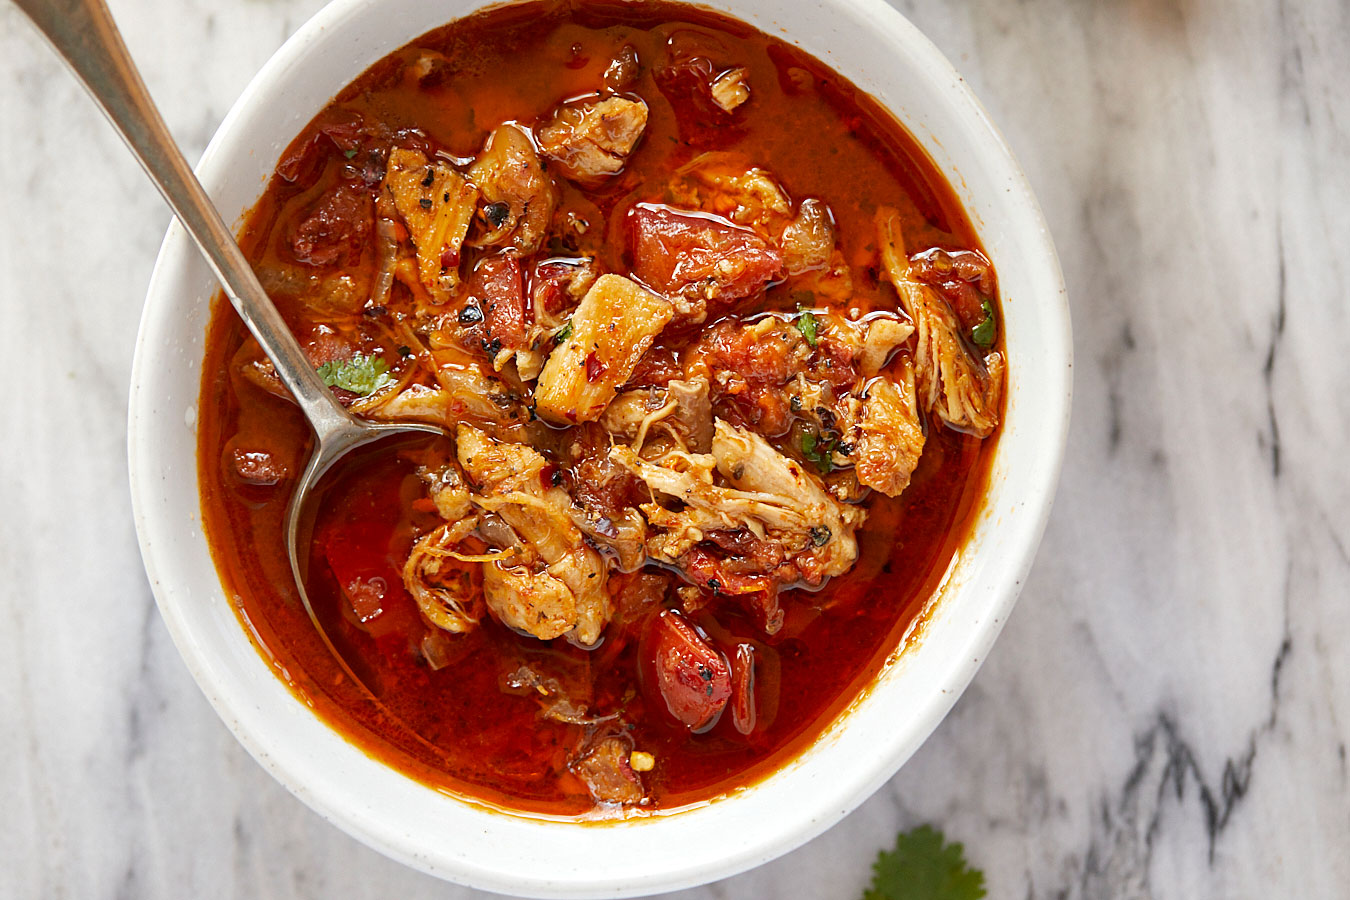 https://www.eatwell101.com/wp-content/uploads/2019/09/instant-pot-chicken-soup-recipe.jpg